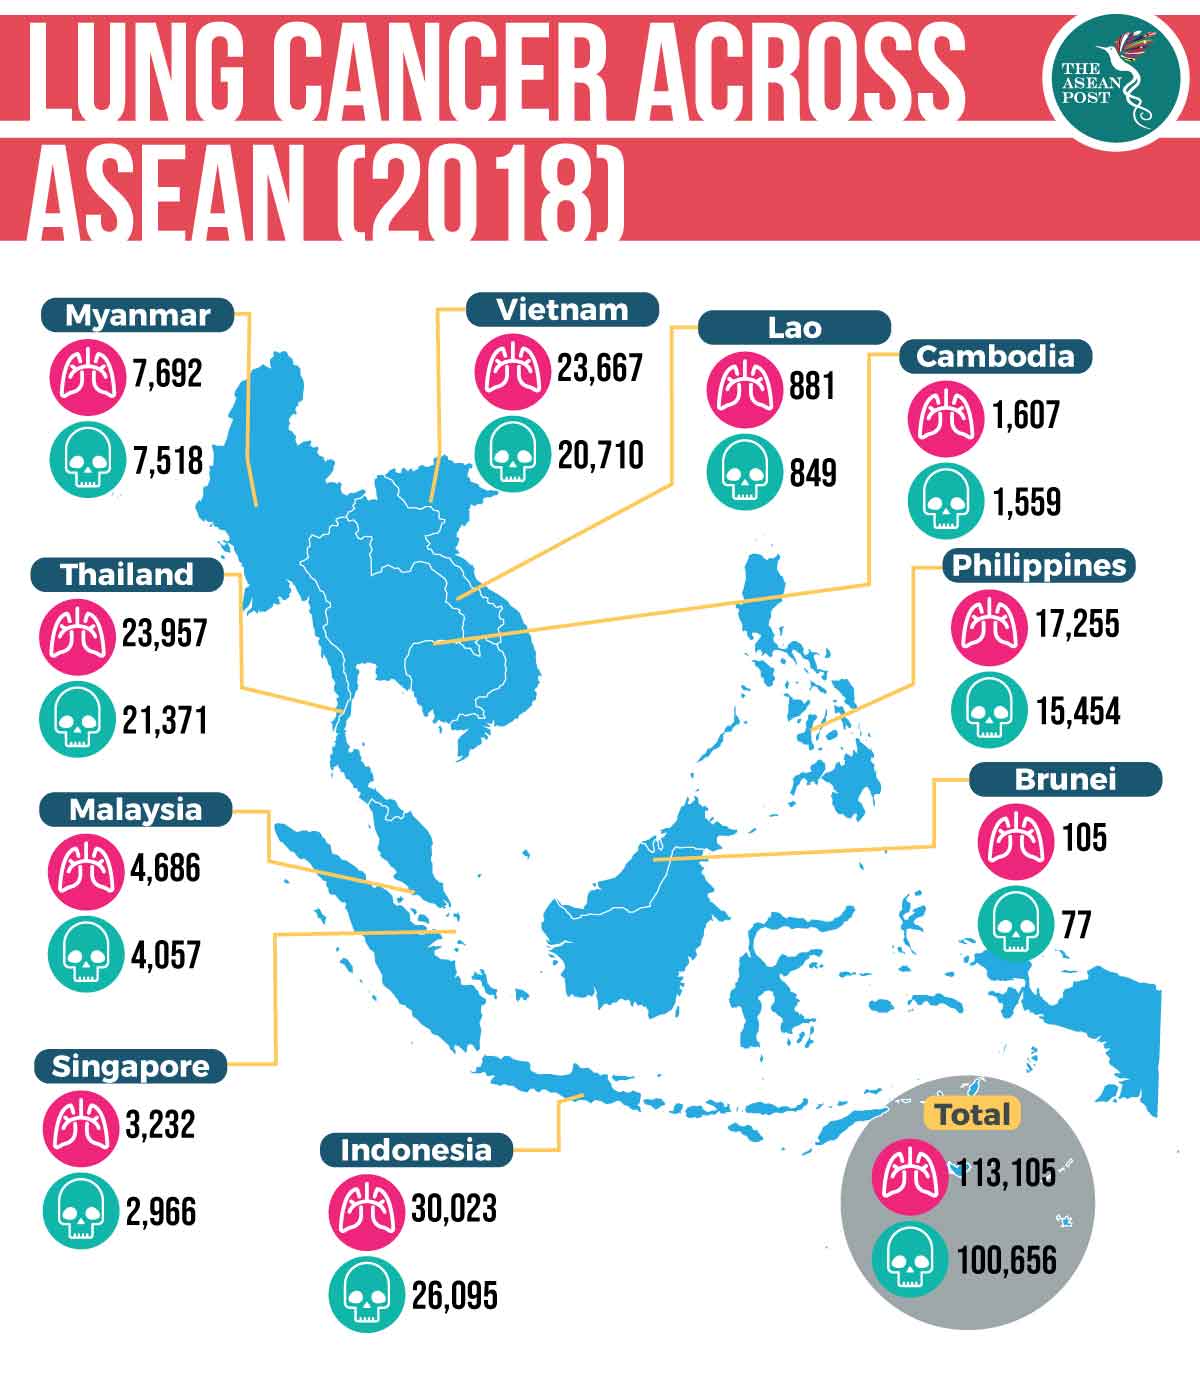 Lung Cancer in ASEAN